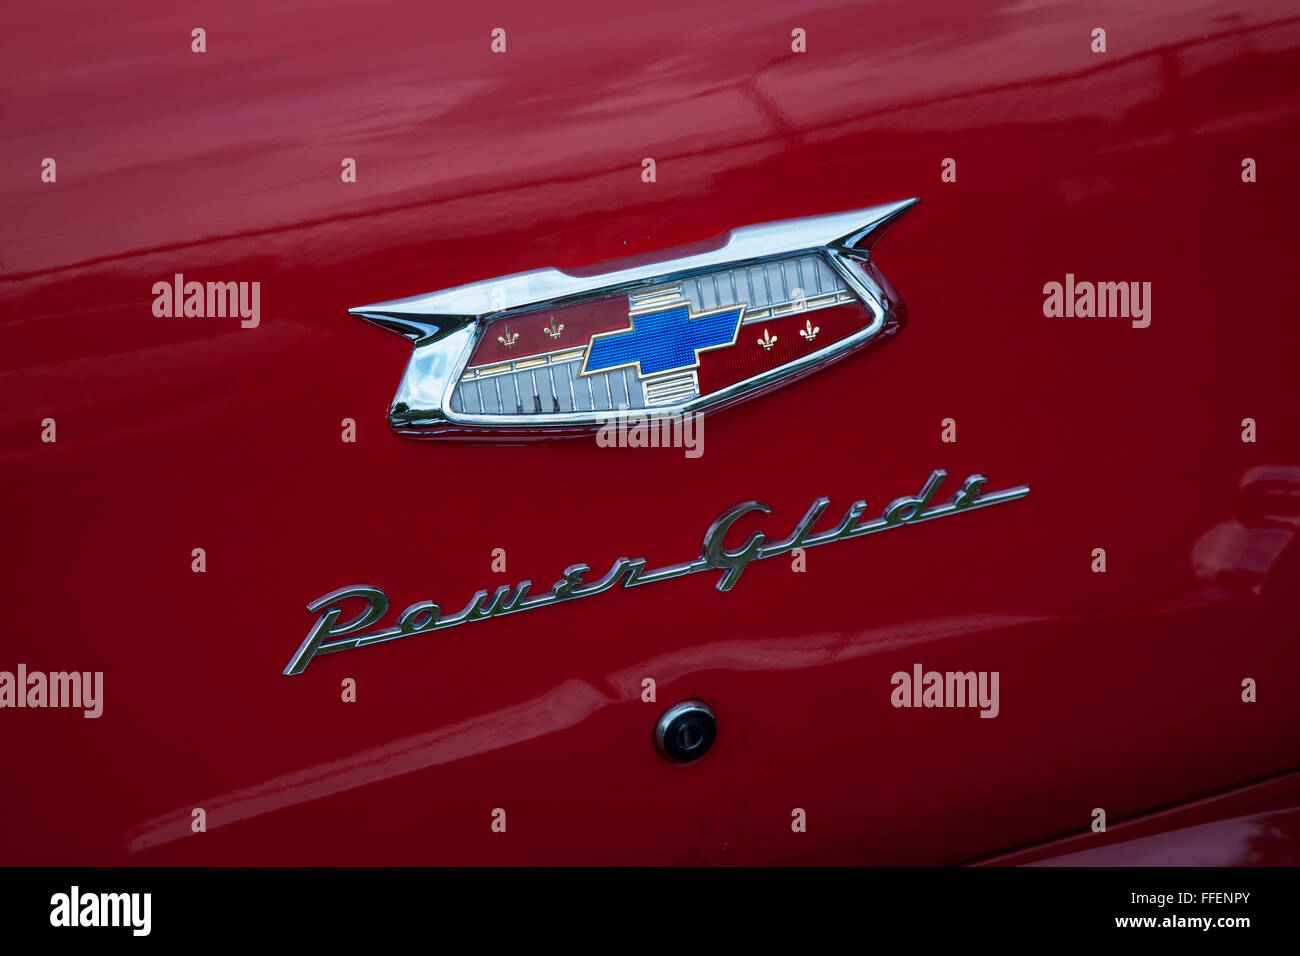 Chevrolet Bel Air Power Glide sul display a Kissimmee città vecchia auto settimanale cruise, Kissimmee Florida Foto Stock